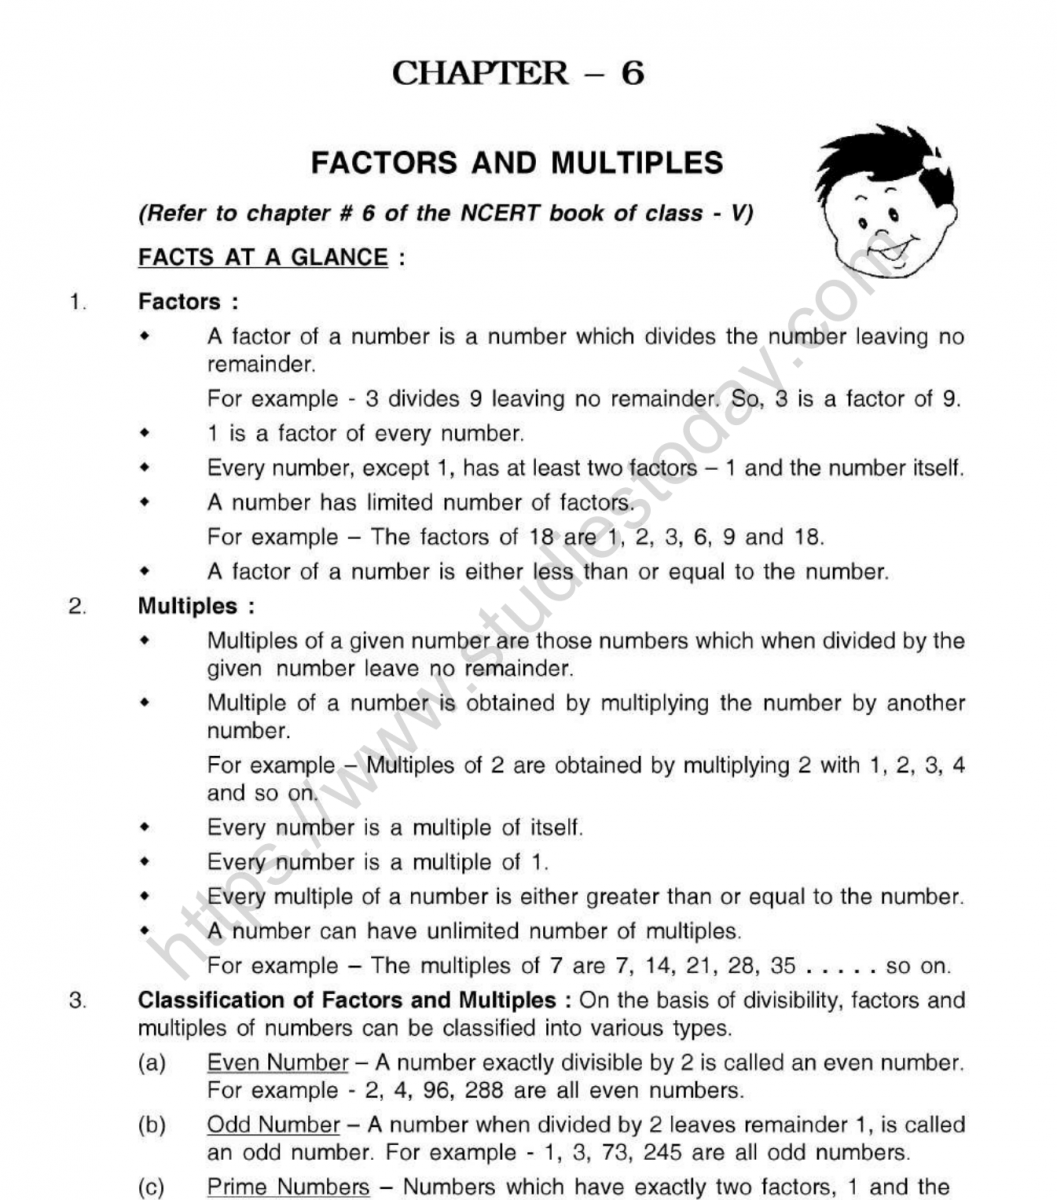 factors-and-multiples-worksheets-grade-5-cbse-roger-brent-s-5th-grade-math-worksheets